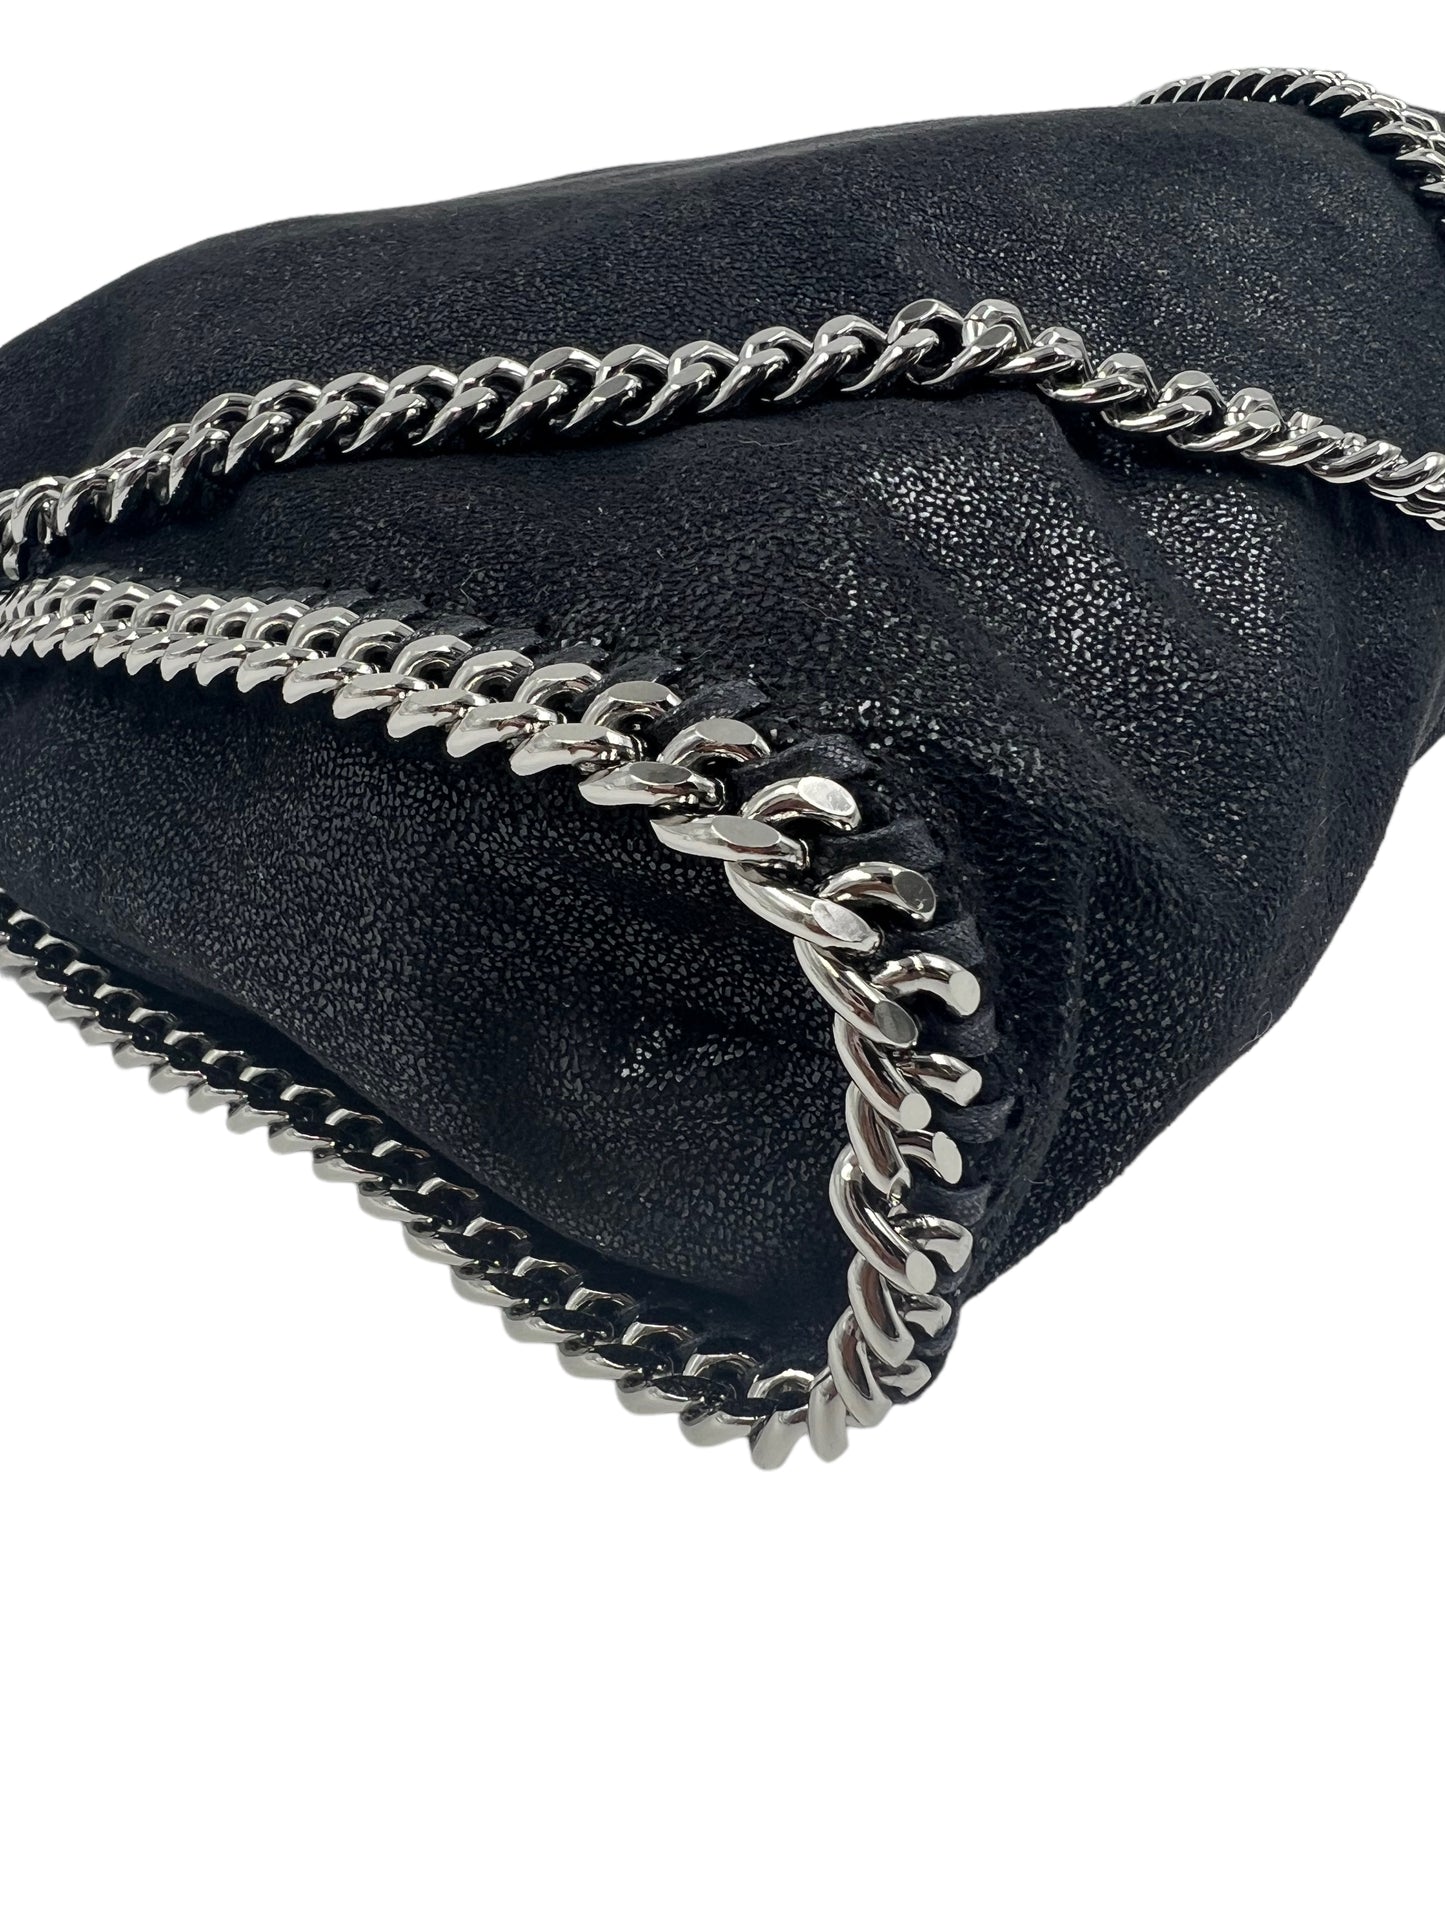 Stella McCartney Black Vegan Leather Three Chain Falabella Bag